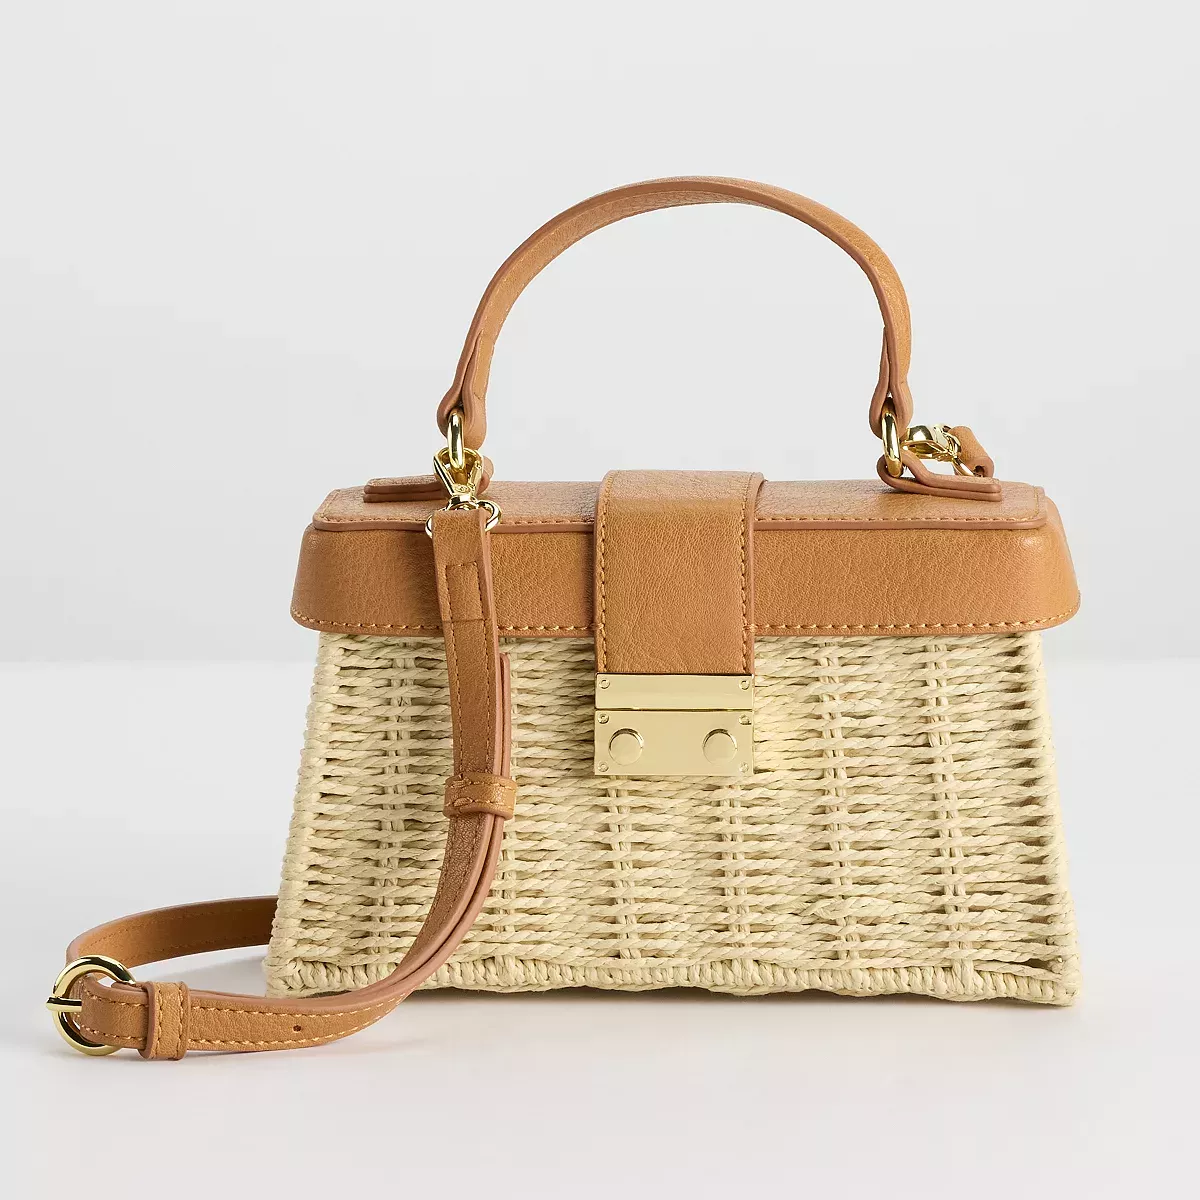 LC Lauren Conrad Floral **TOTE** Bag with small zipper purse Size